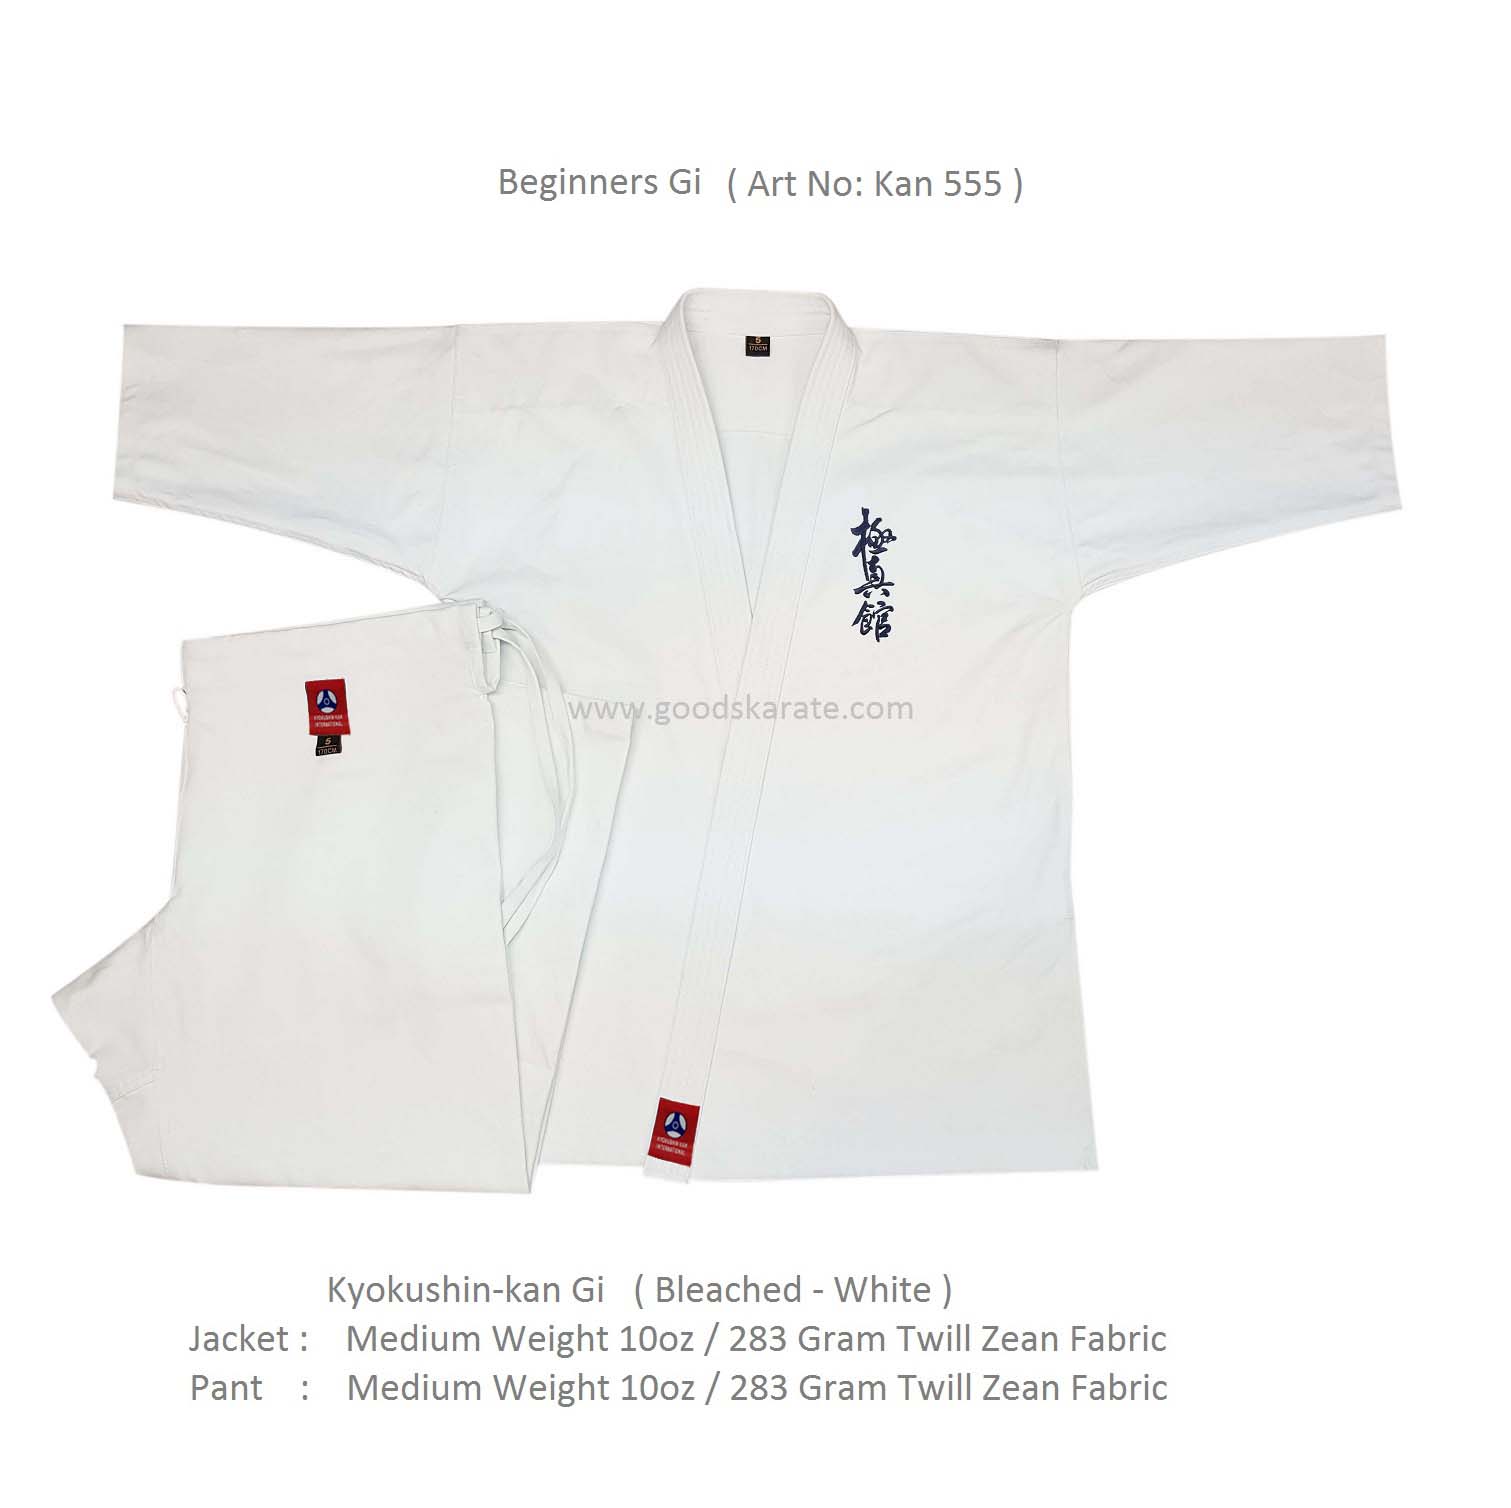 Medium Weight 10oz Kyokushin-kan Gi